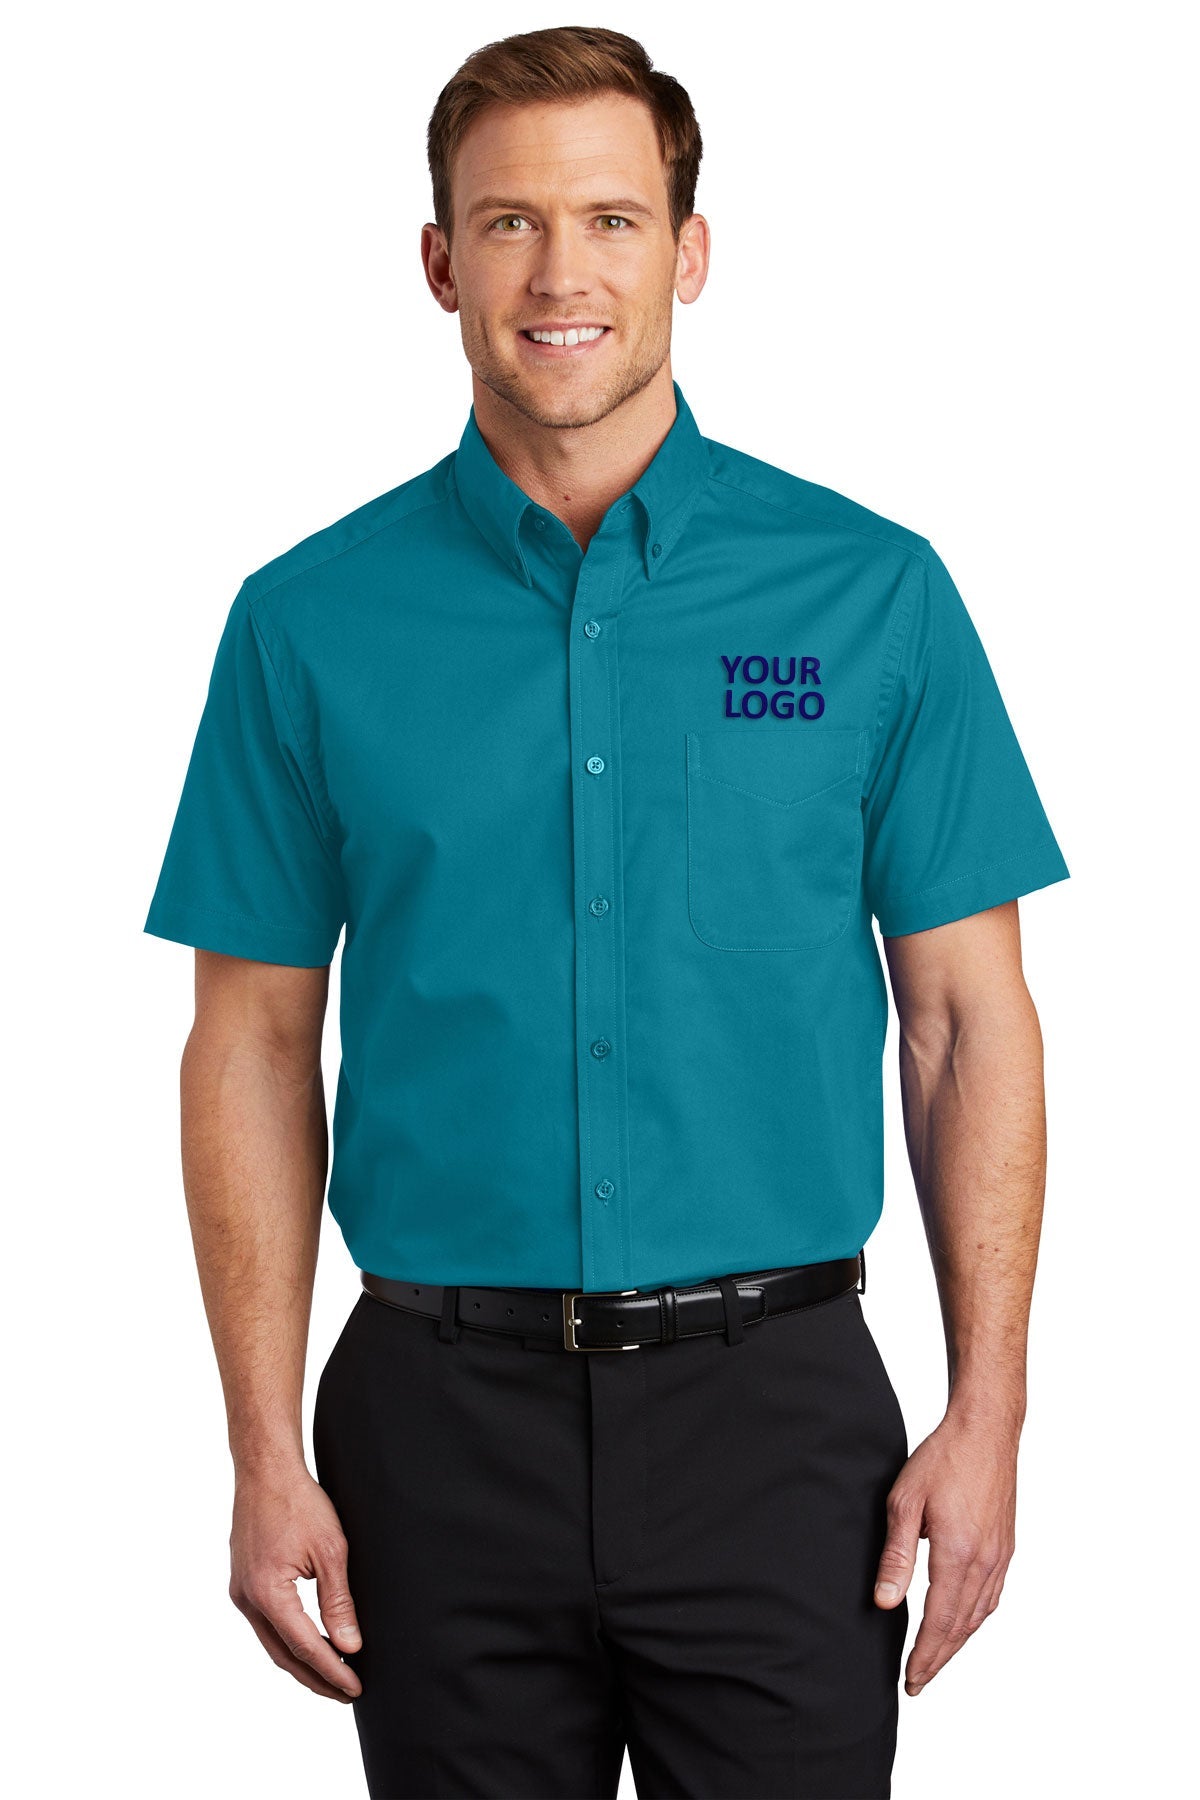 Port Authority Teal Green TLS508 custom work shirts